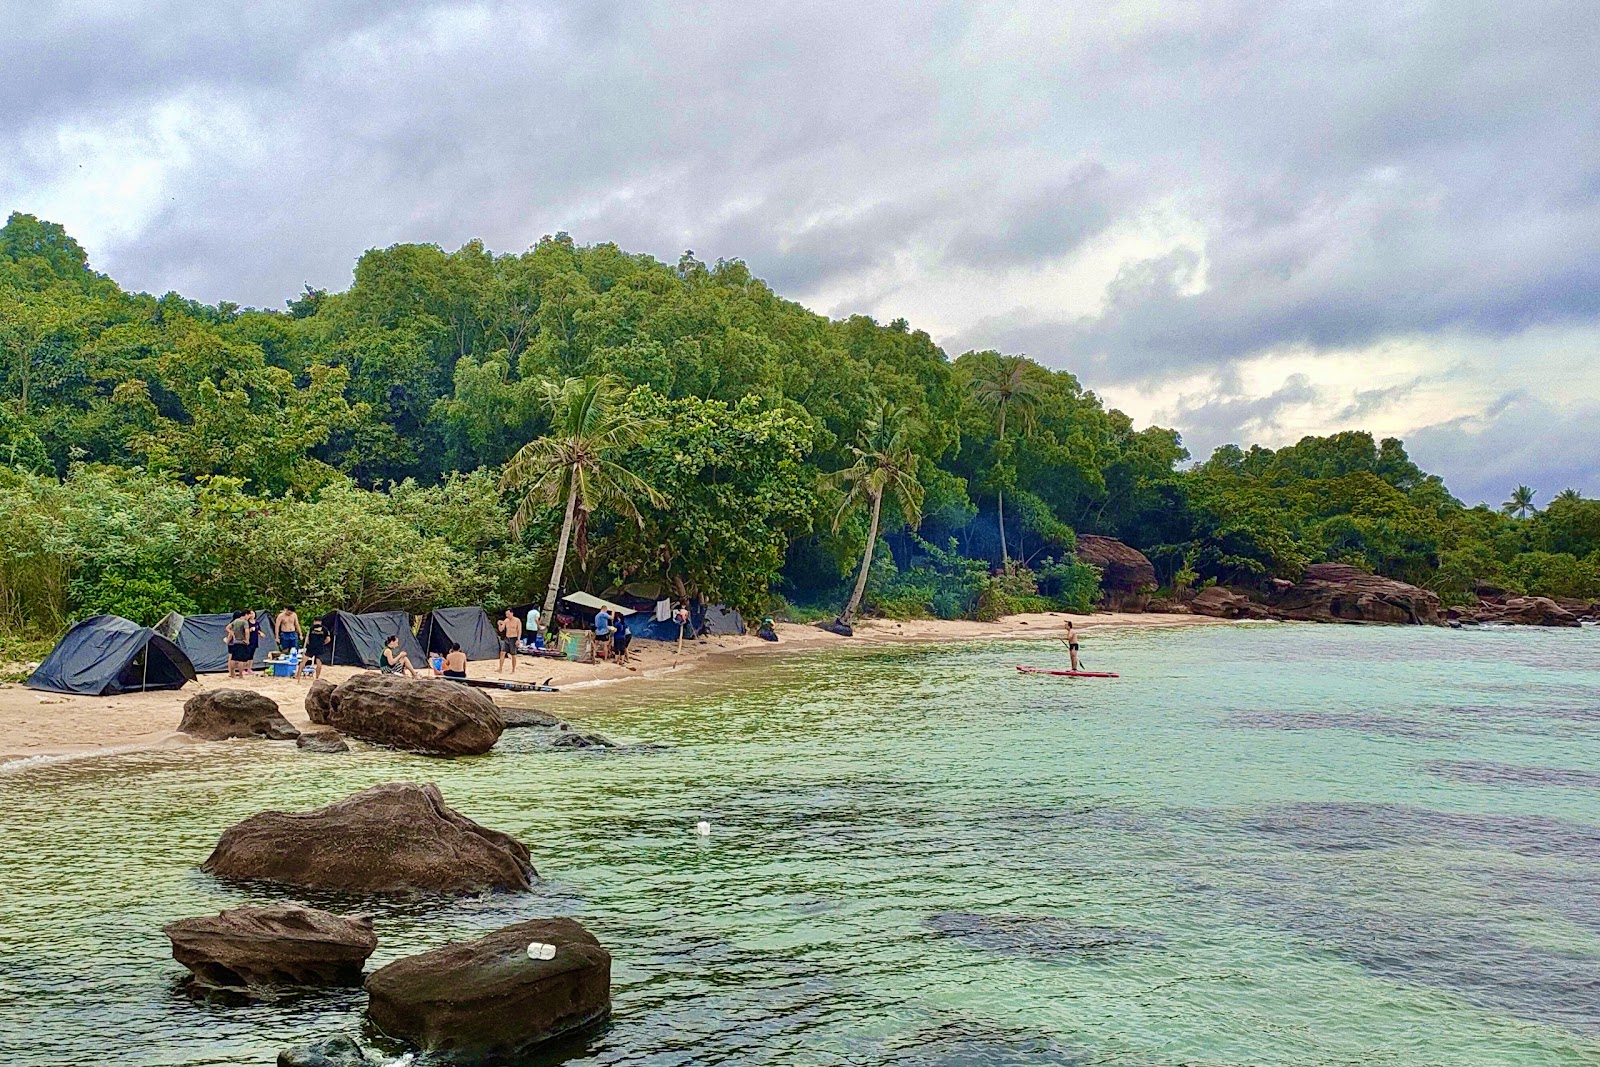 Fotografija Gam Ghi island Beach nahaja se v naravnem okolju